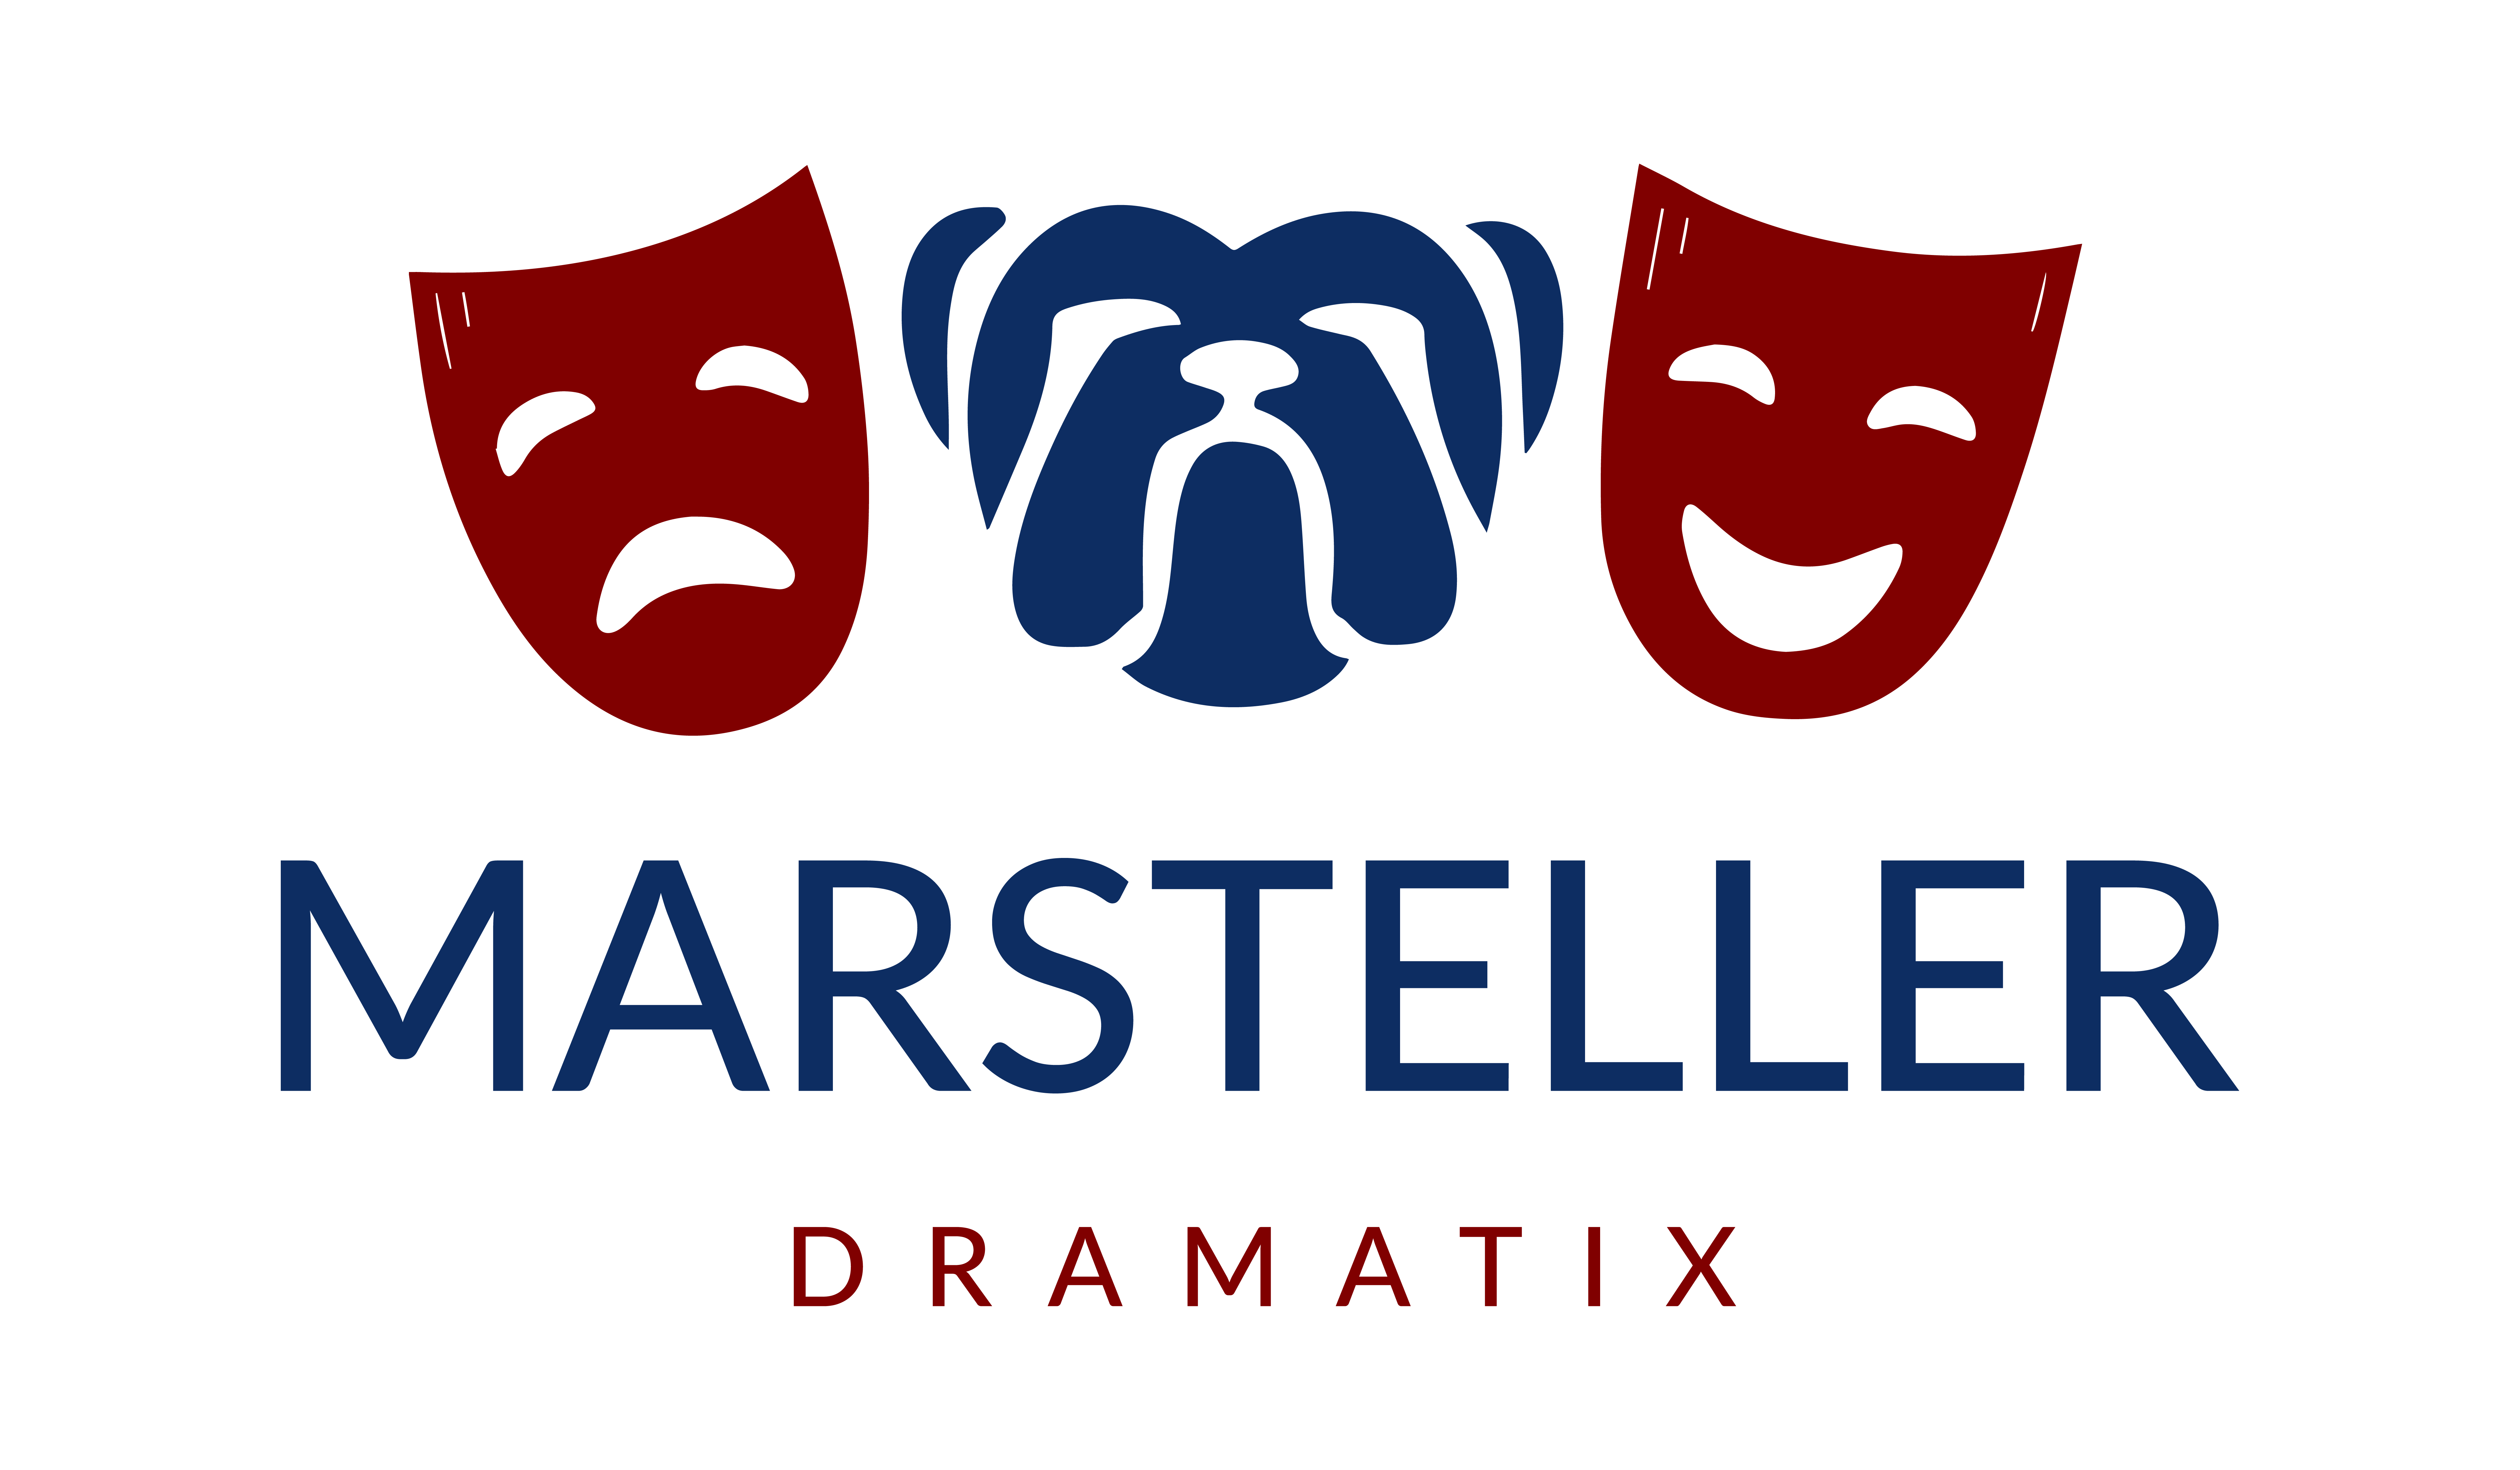 Premium Vector | Comedy and tragedy theatrical masks theatre or drama  school logo design symbol